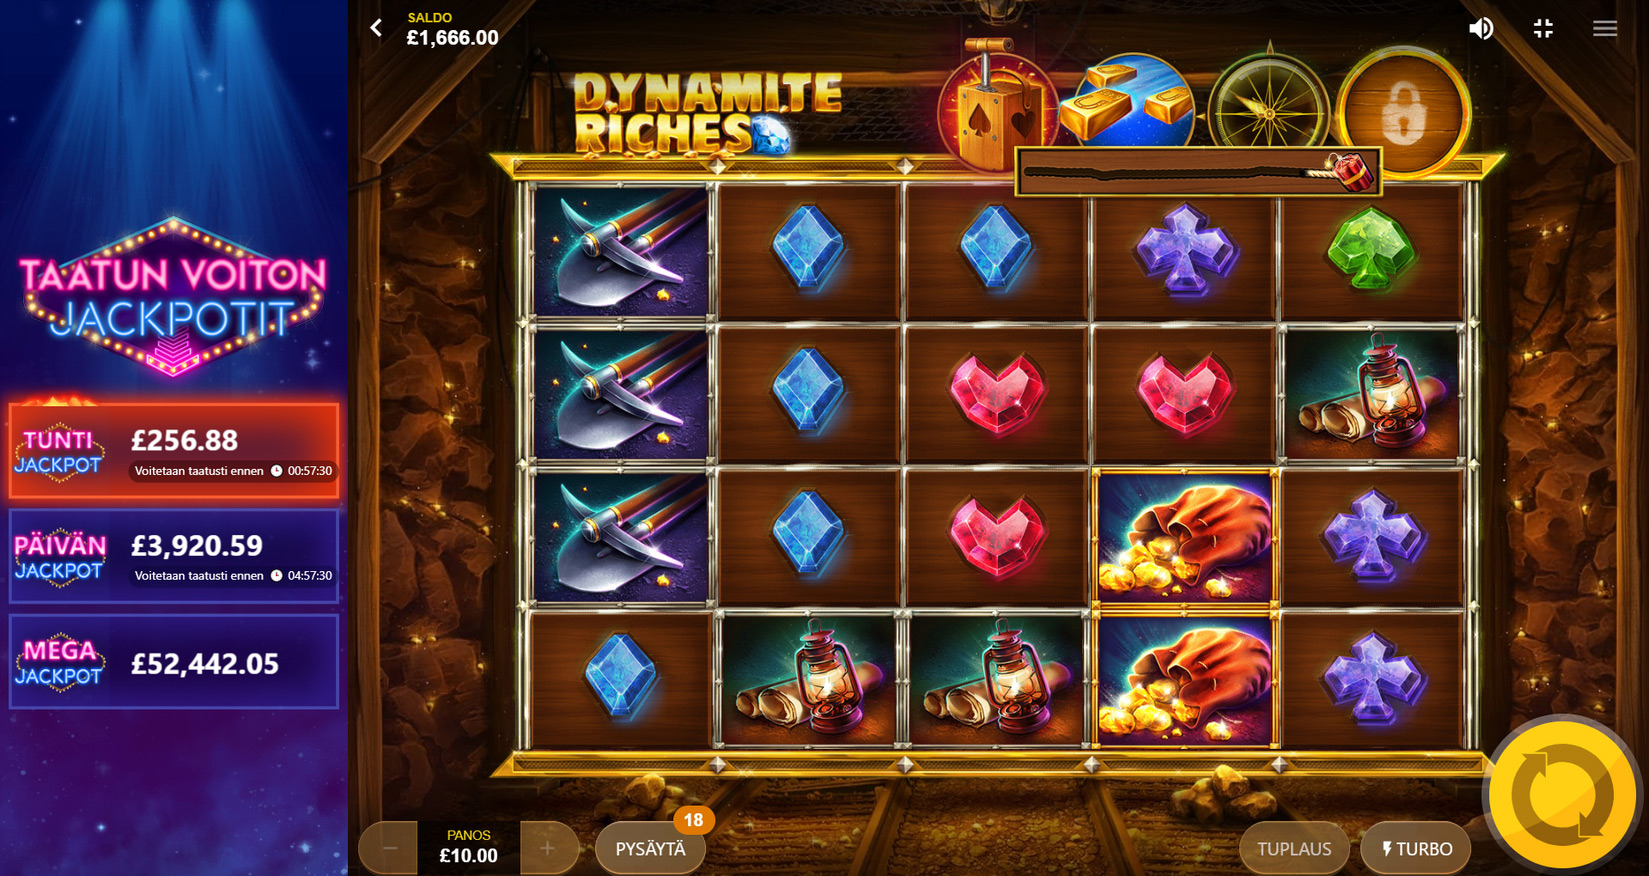 Dynamite riches jackpot casino